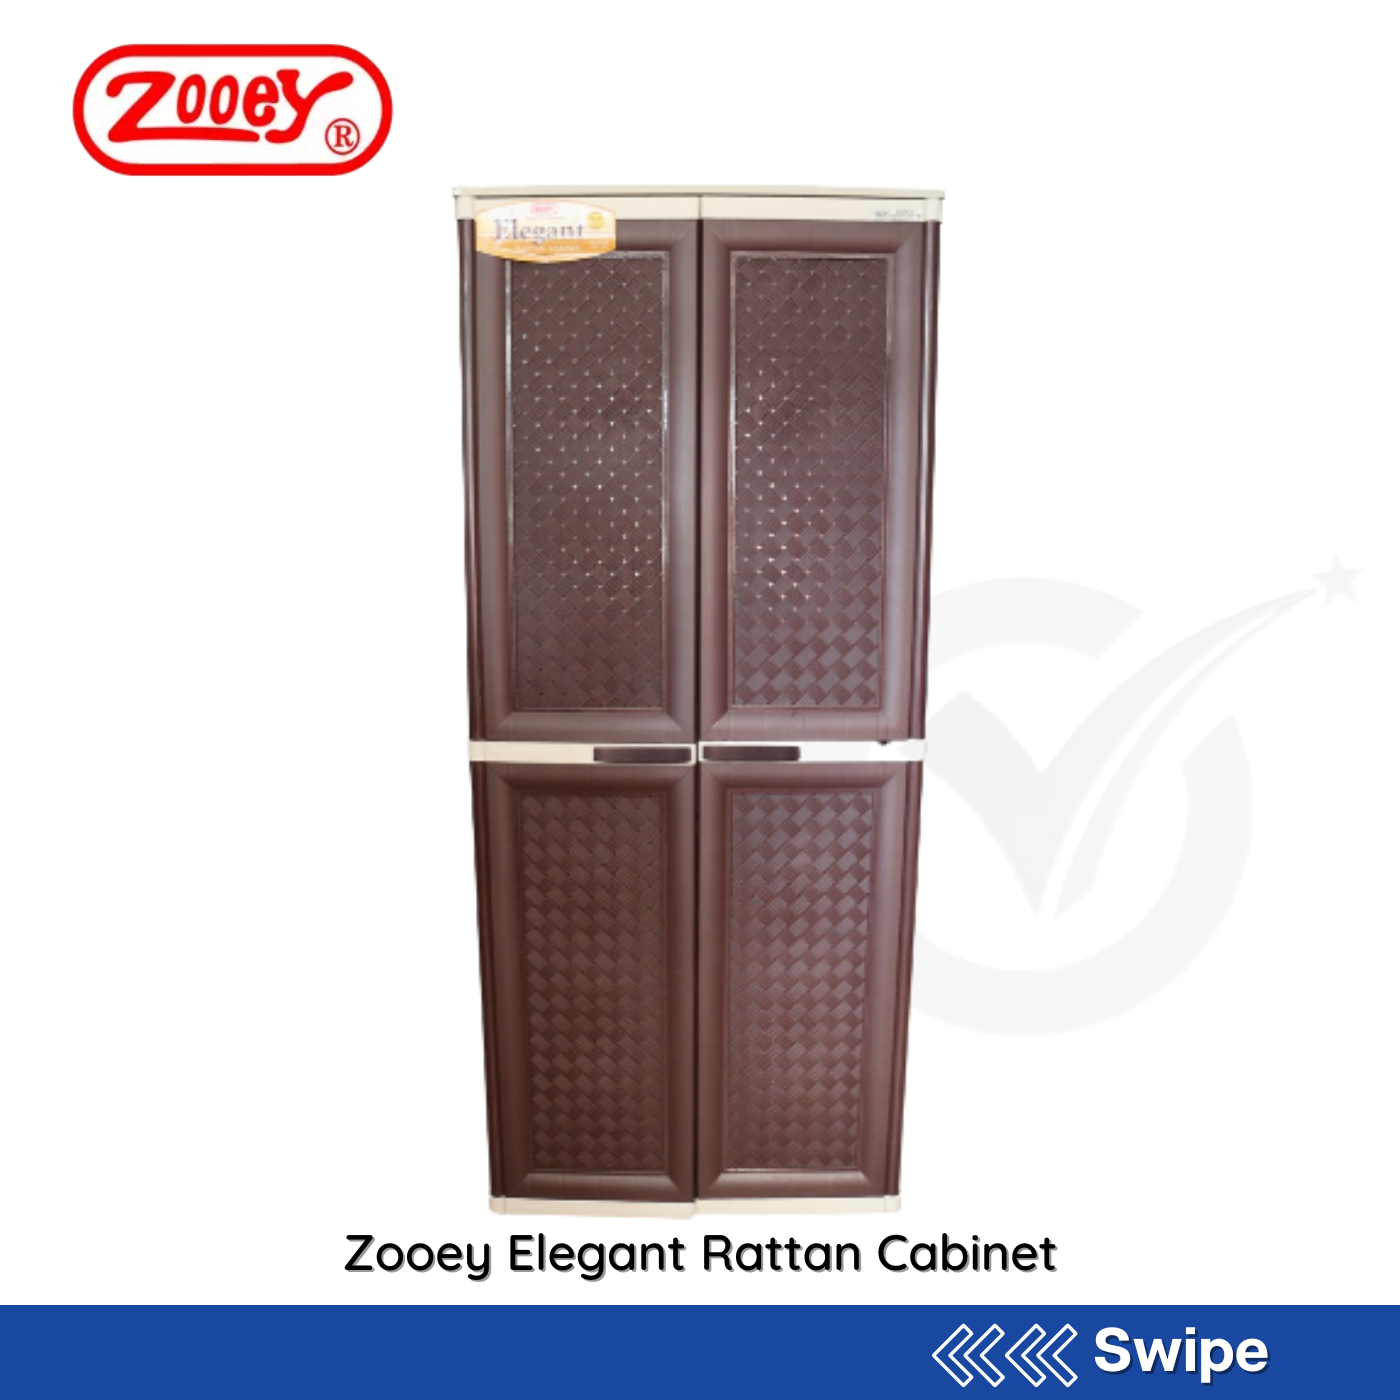 Zooey Elegant Rattan Cabinet - People's Choice Marketing